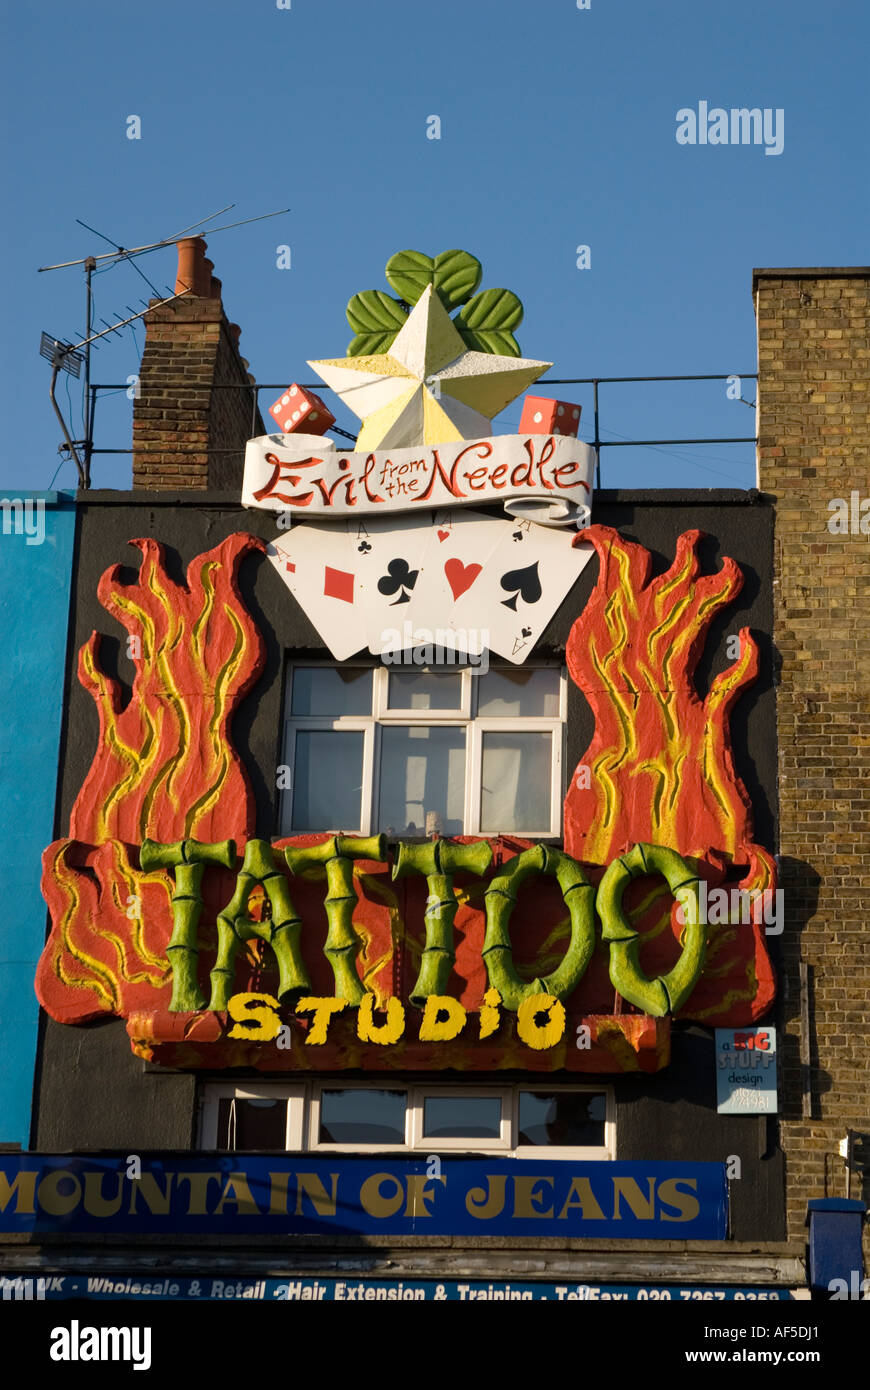 Evil Needle tattoo studio in Camden Market London England UK Stock Photo